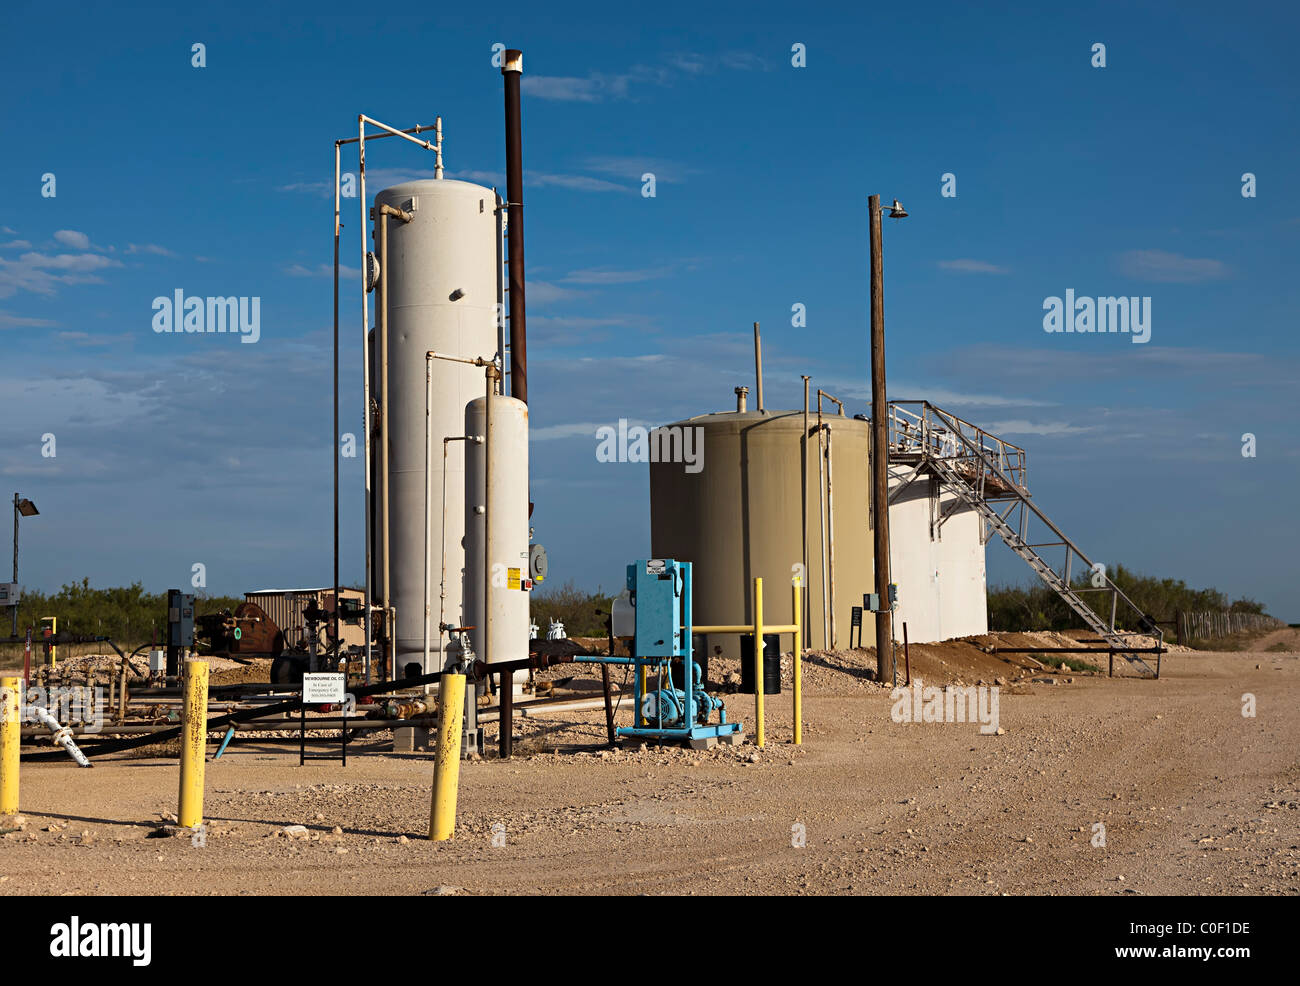 Oil storage tanks on site in oilfields Midland Texas USA Stock Photo